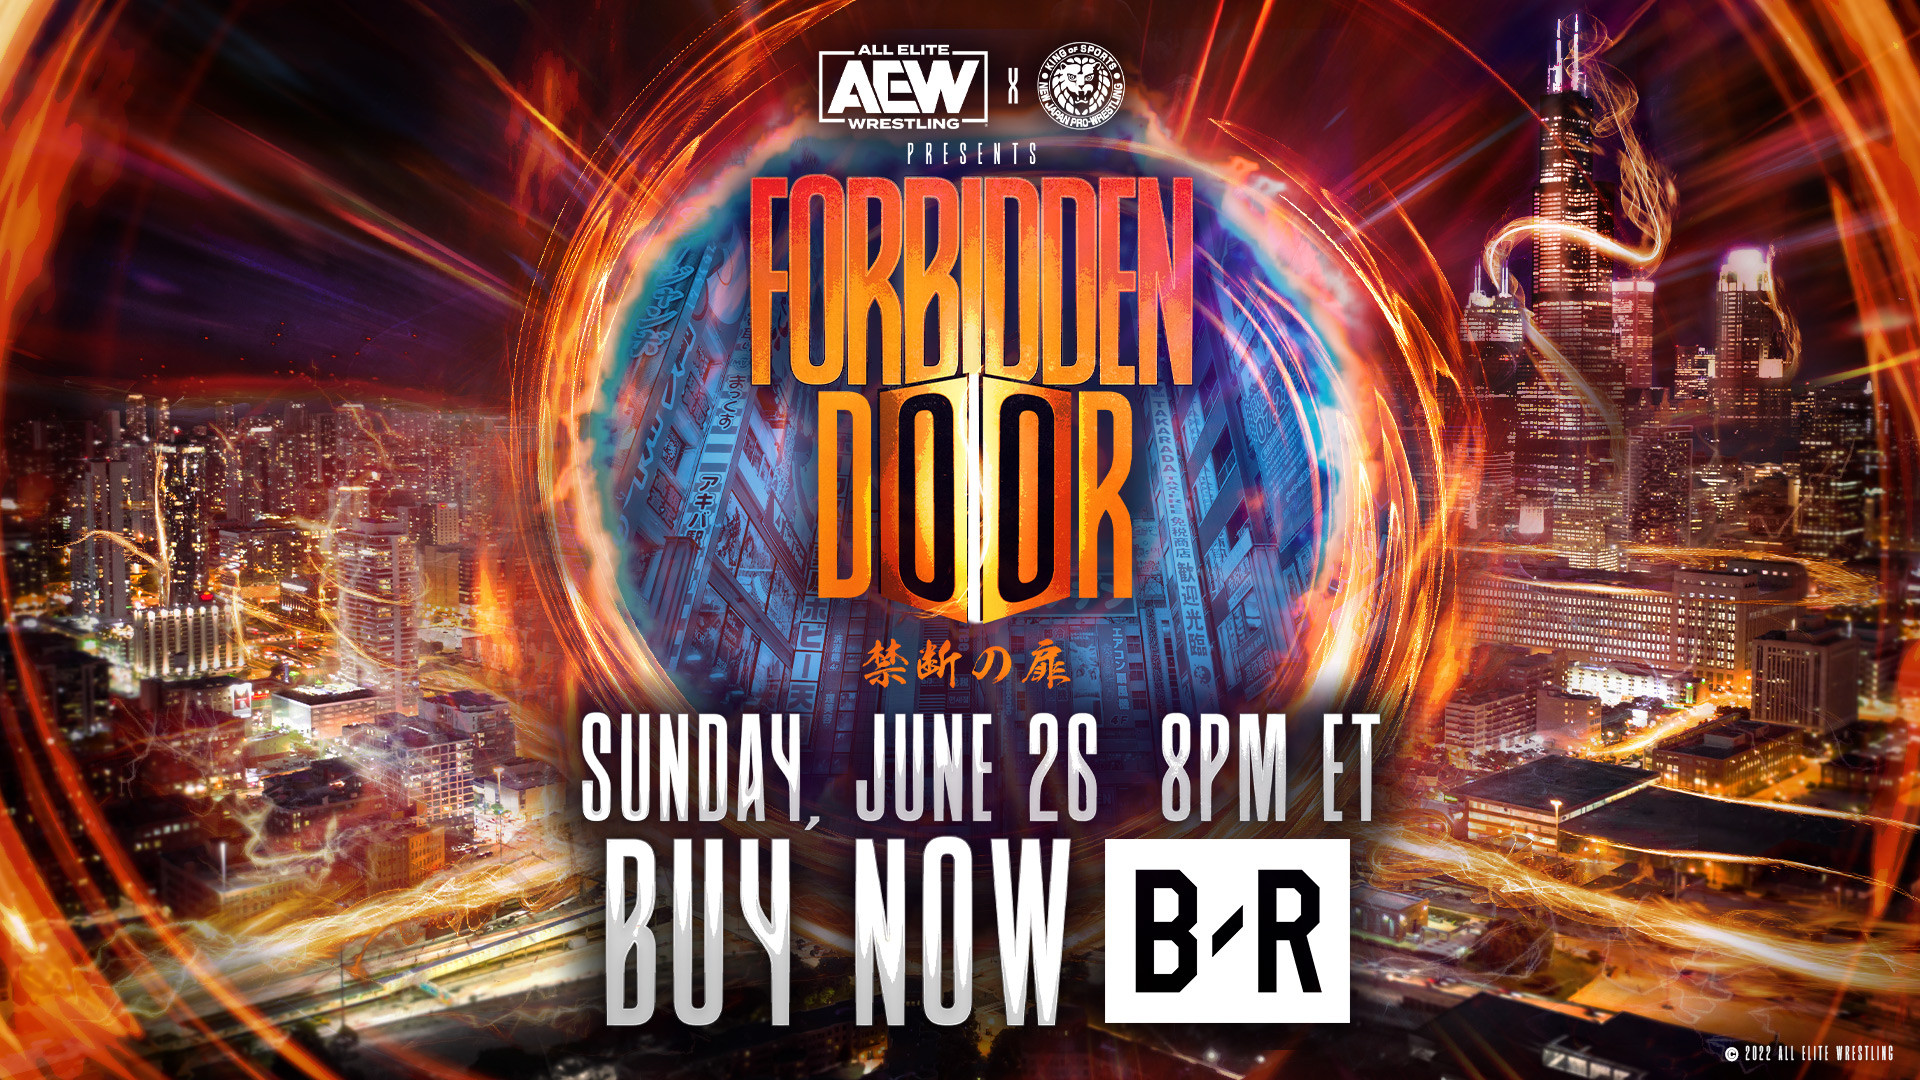 AEW x NJPW Forbidden Door” Pay-Per-View to Stream on Bleacher Report on Sunday, June 26 at 8 p.m